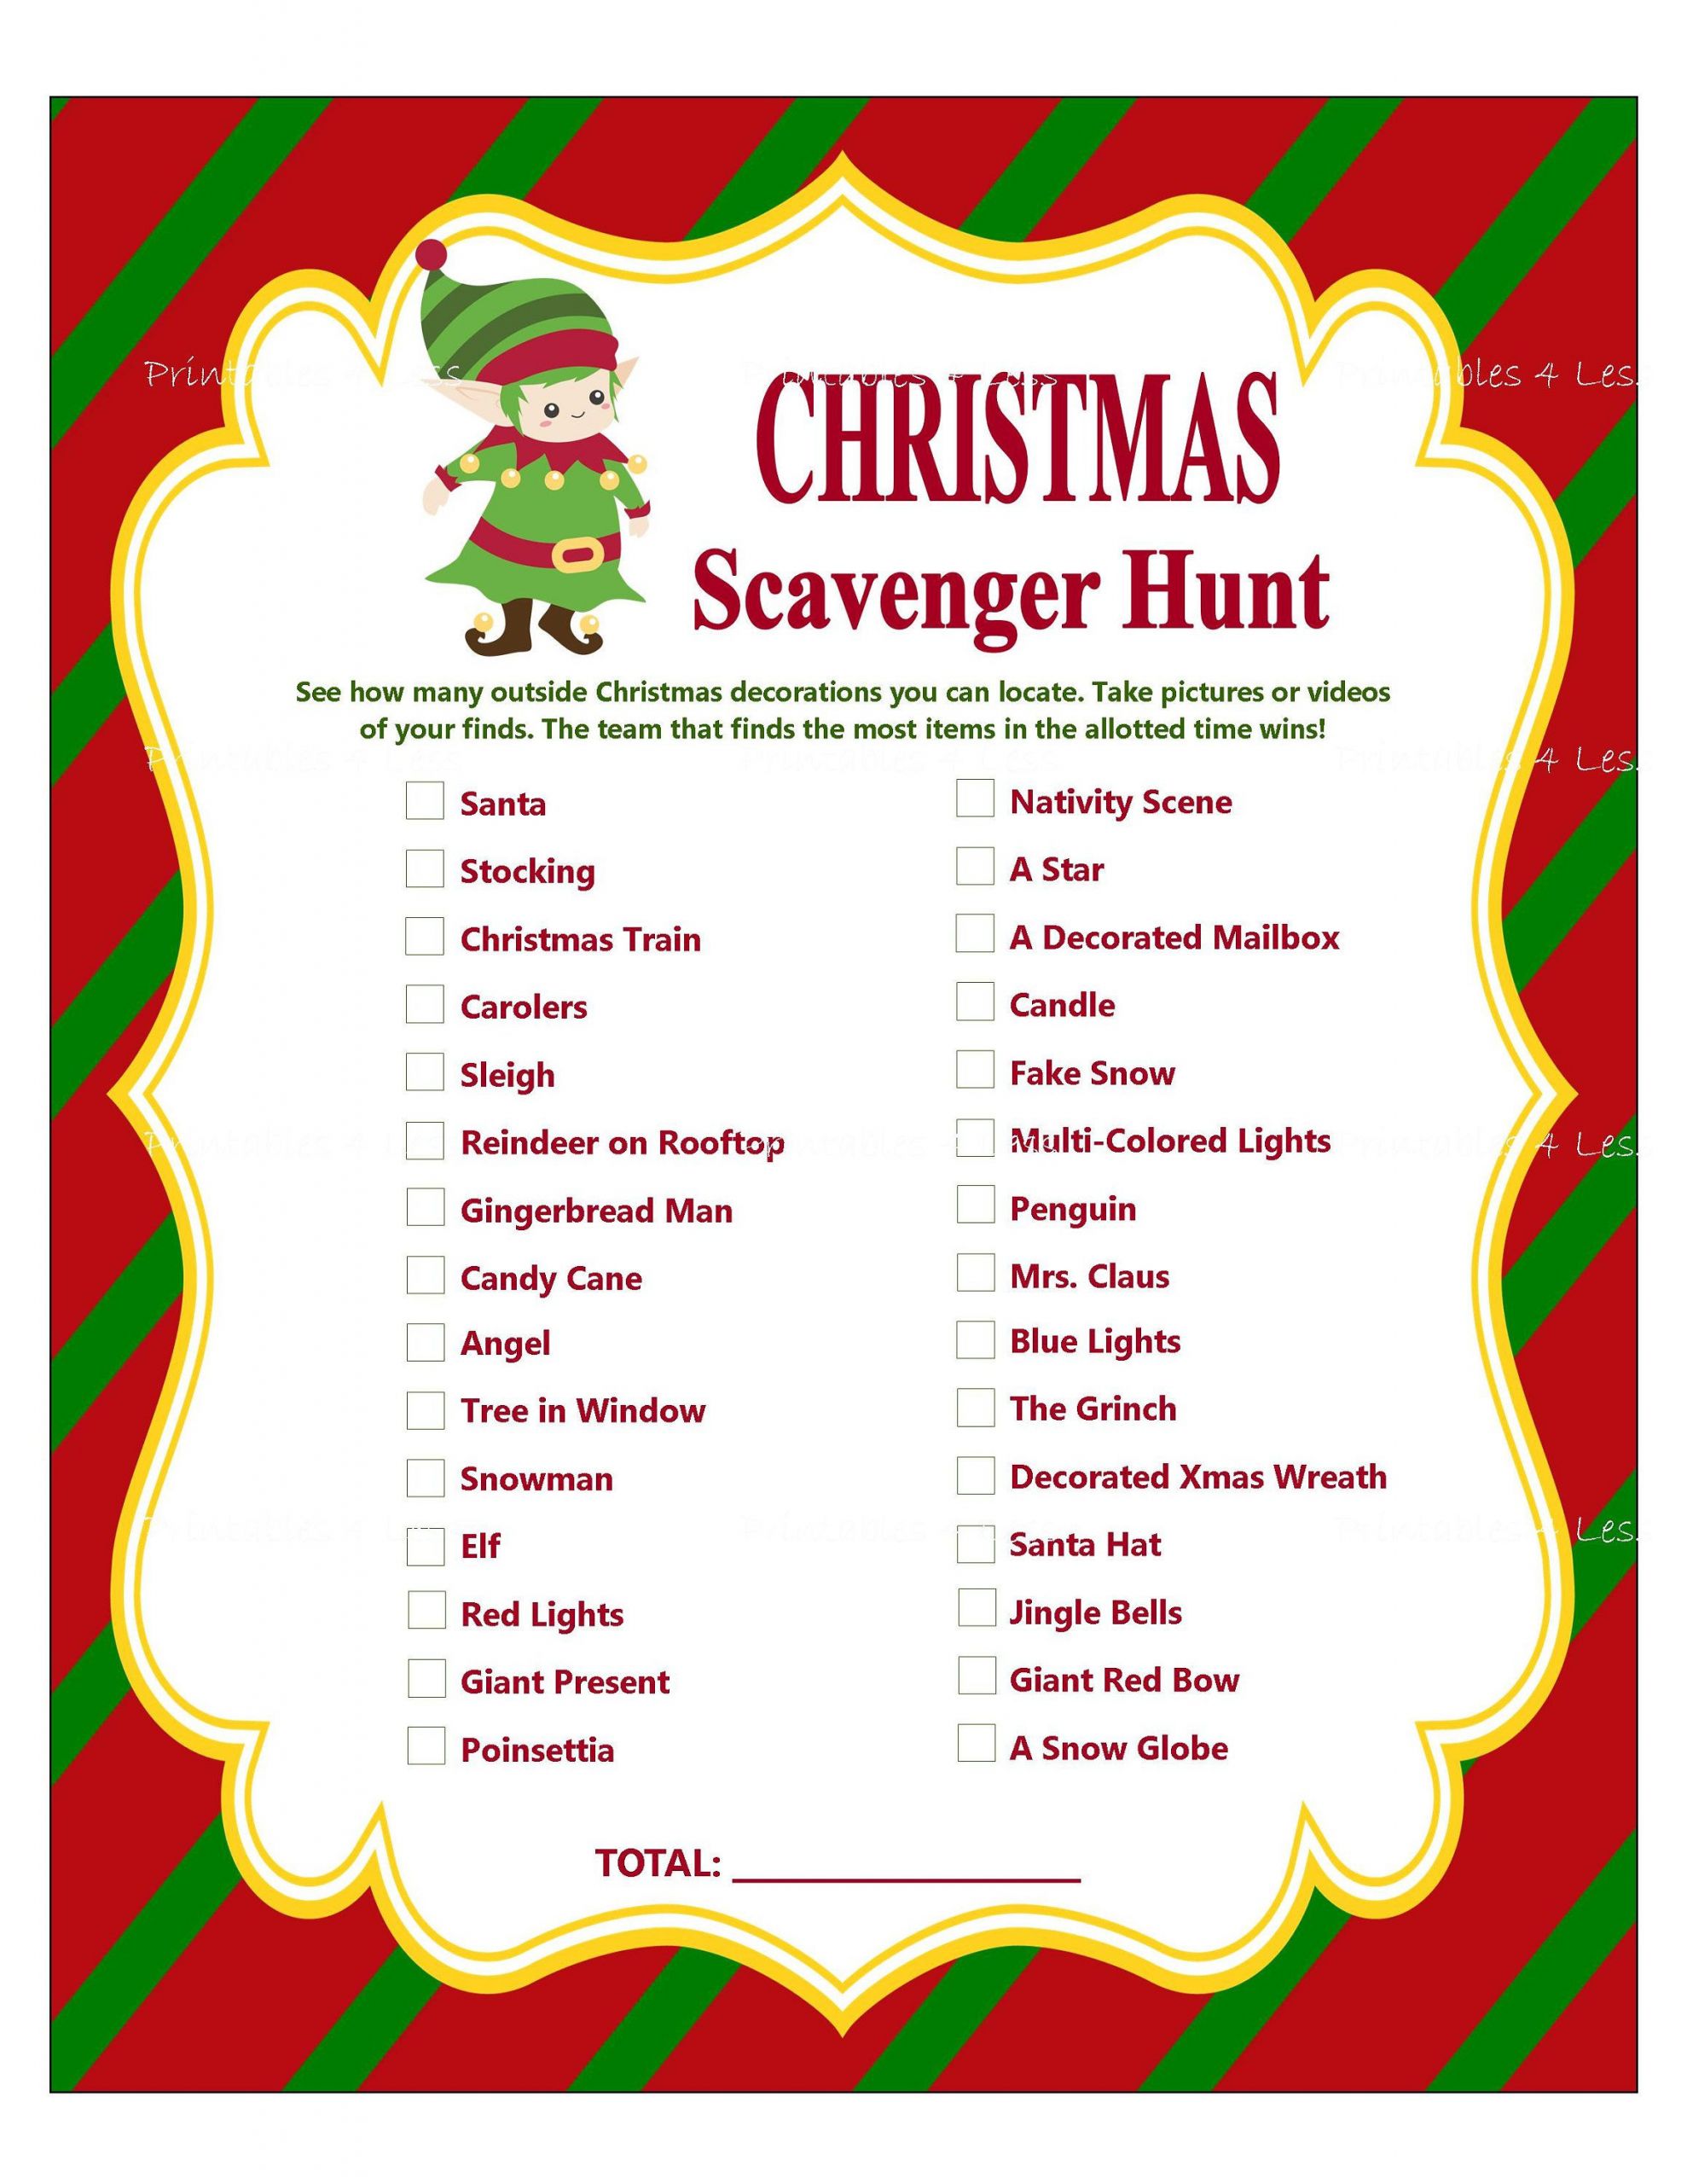 Christmas Party Scavenger Hunt Ideas
 Christmas Scavenger Hunt Printable Christmas Party Game